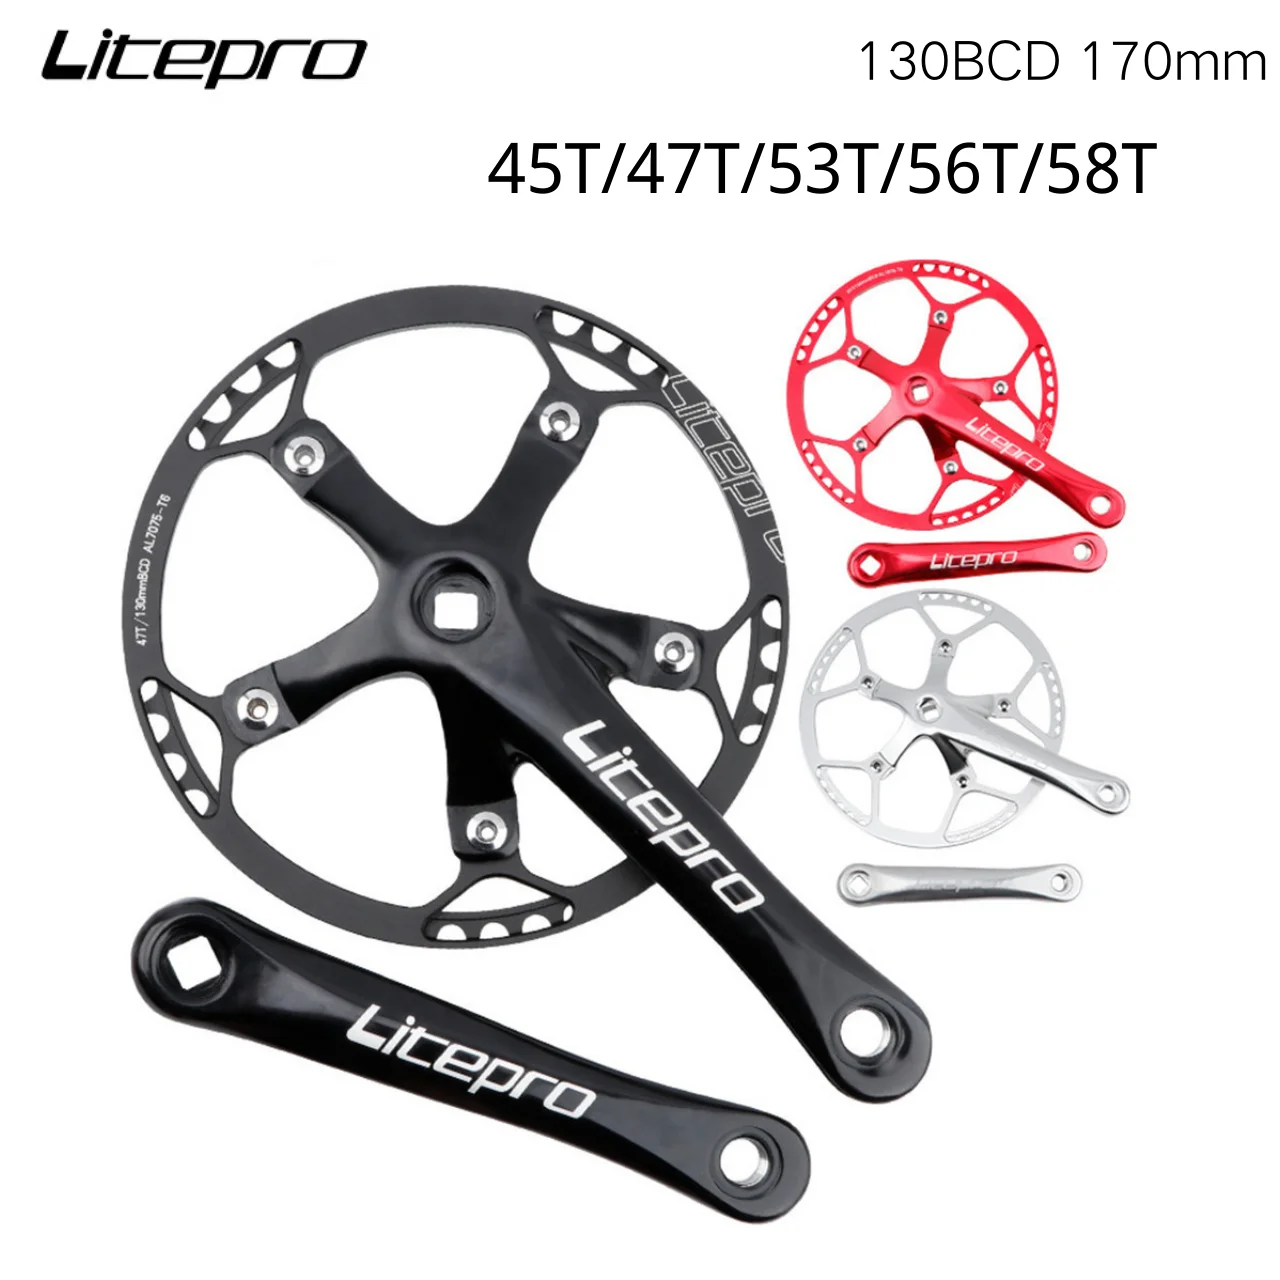 

Litepro BMX Bicycle BCD 130mm Integrated Chainwheel Crankset Single Crank For Folding Bike 45/47/53/56/58T Chainring Accessory